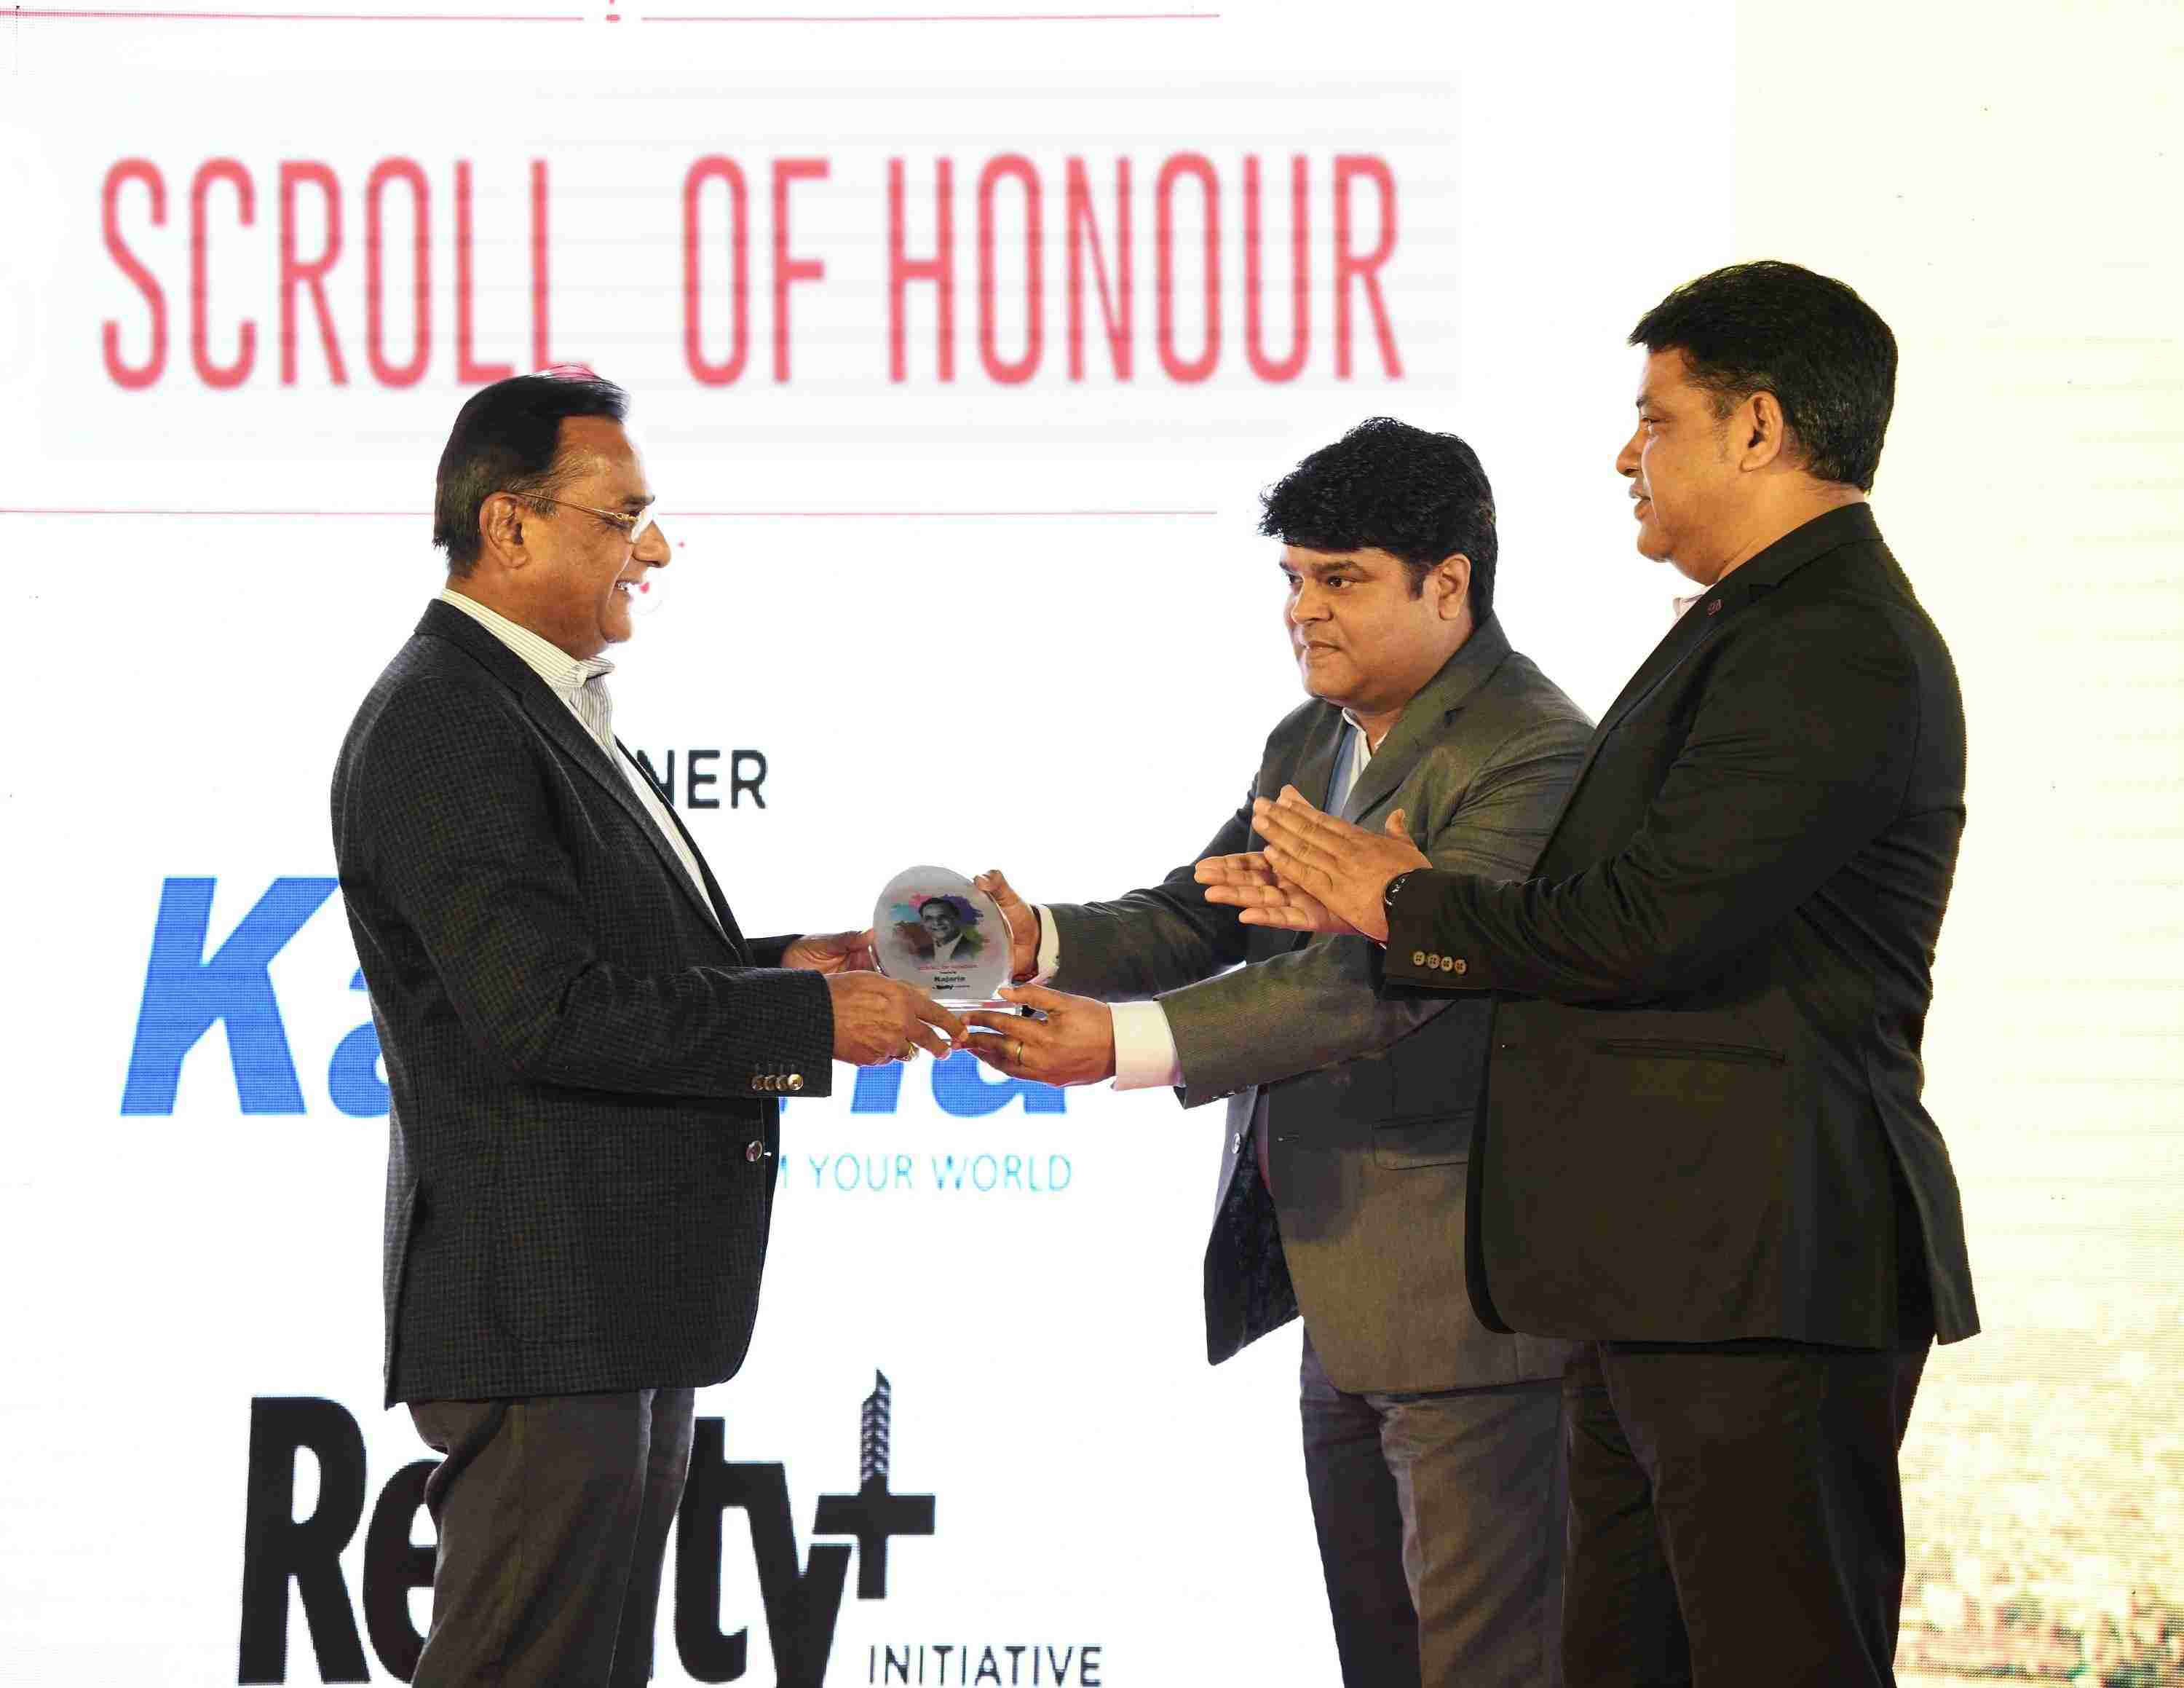 Sir V T Palresha of VTP Realty awarded Scroll of Honour 2018 Update